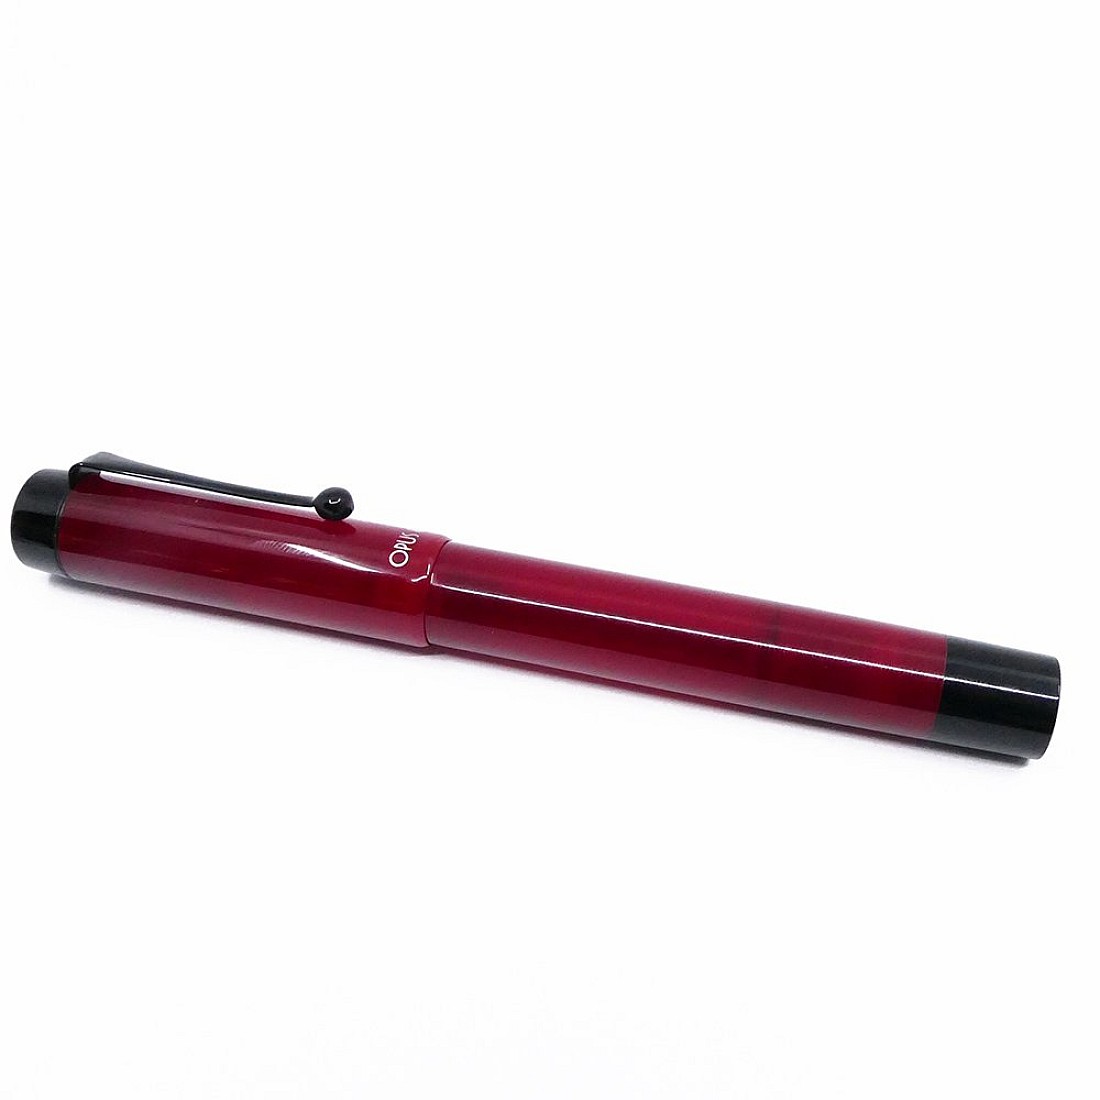 Opus 88 Demonstrator Red Fountain pen